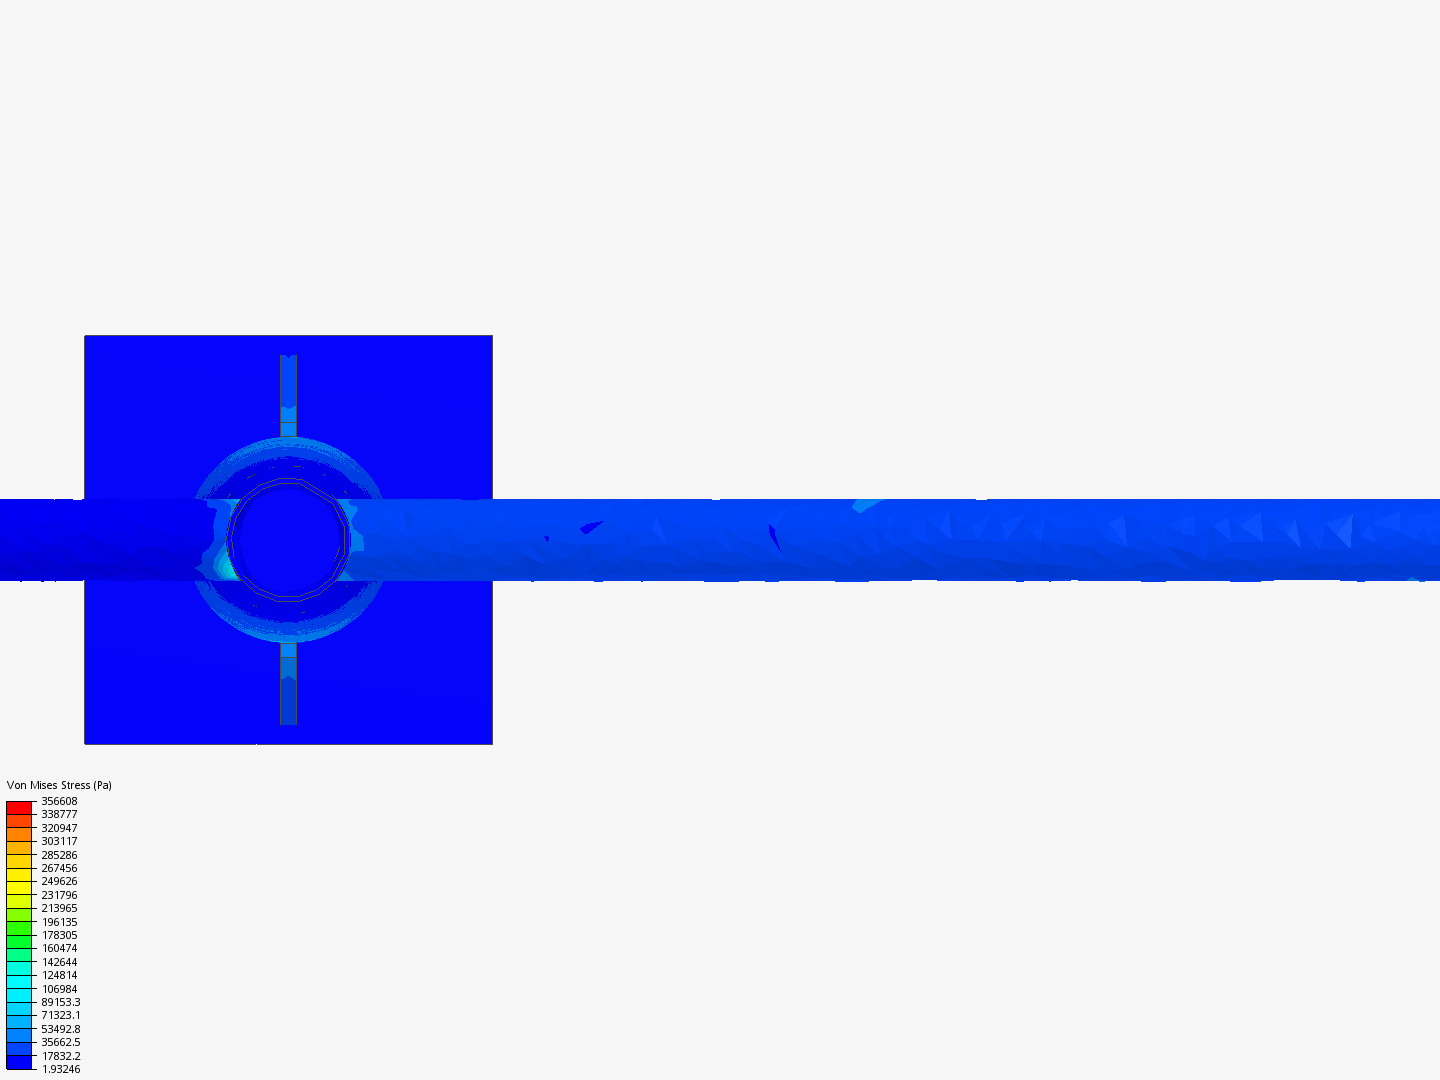 light pole design analysis image